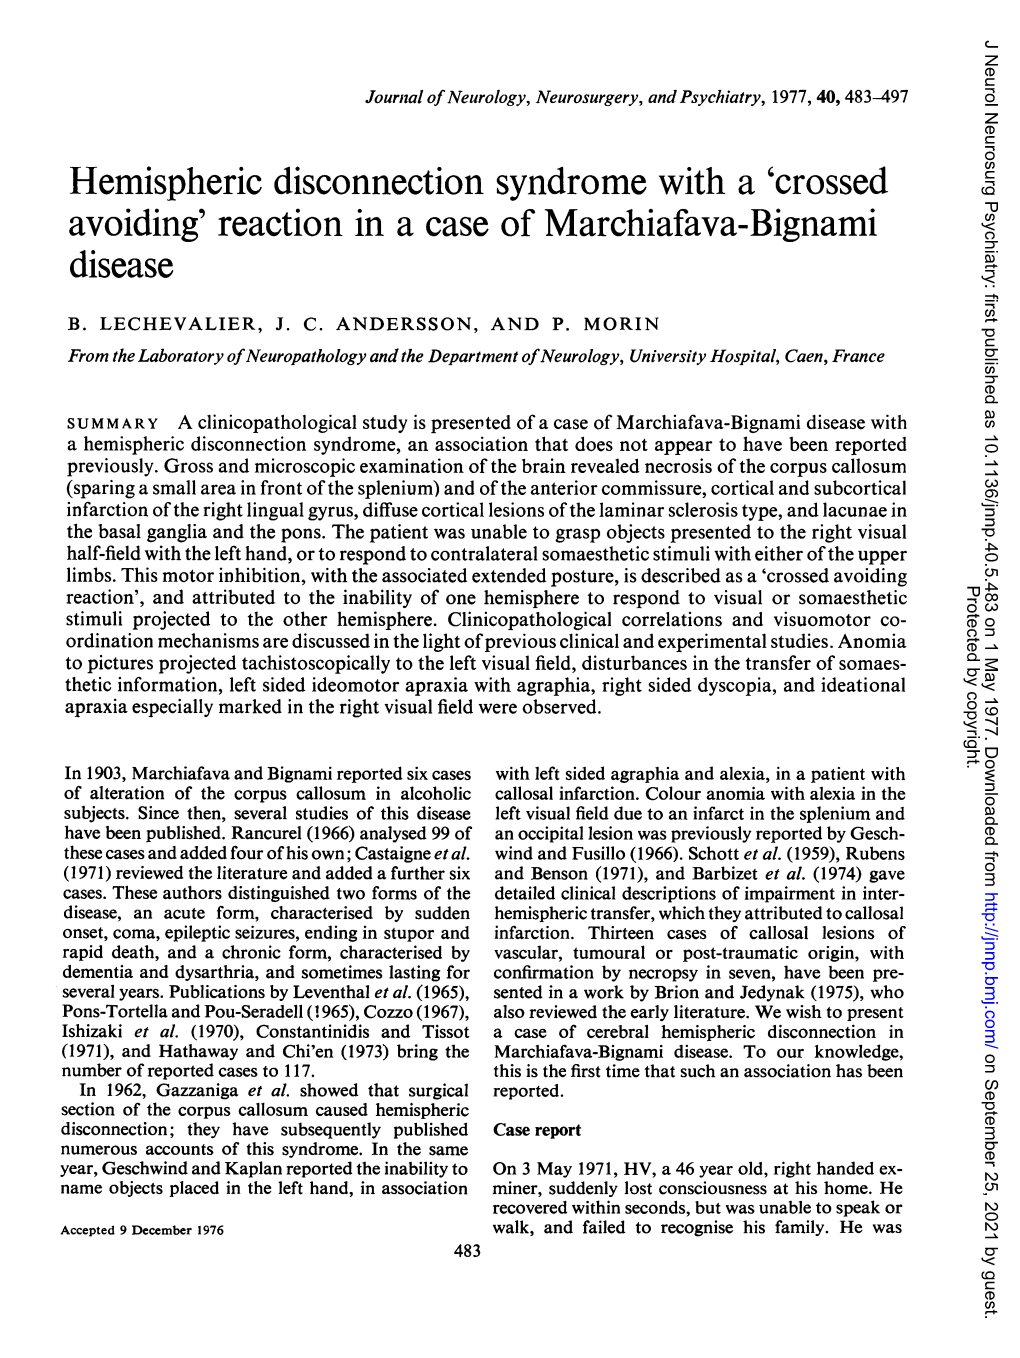 'Crossed Avoiding' Reaction in a Case of Marchiafava-Bignami Disease